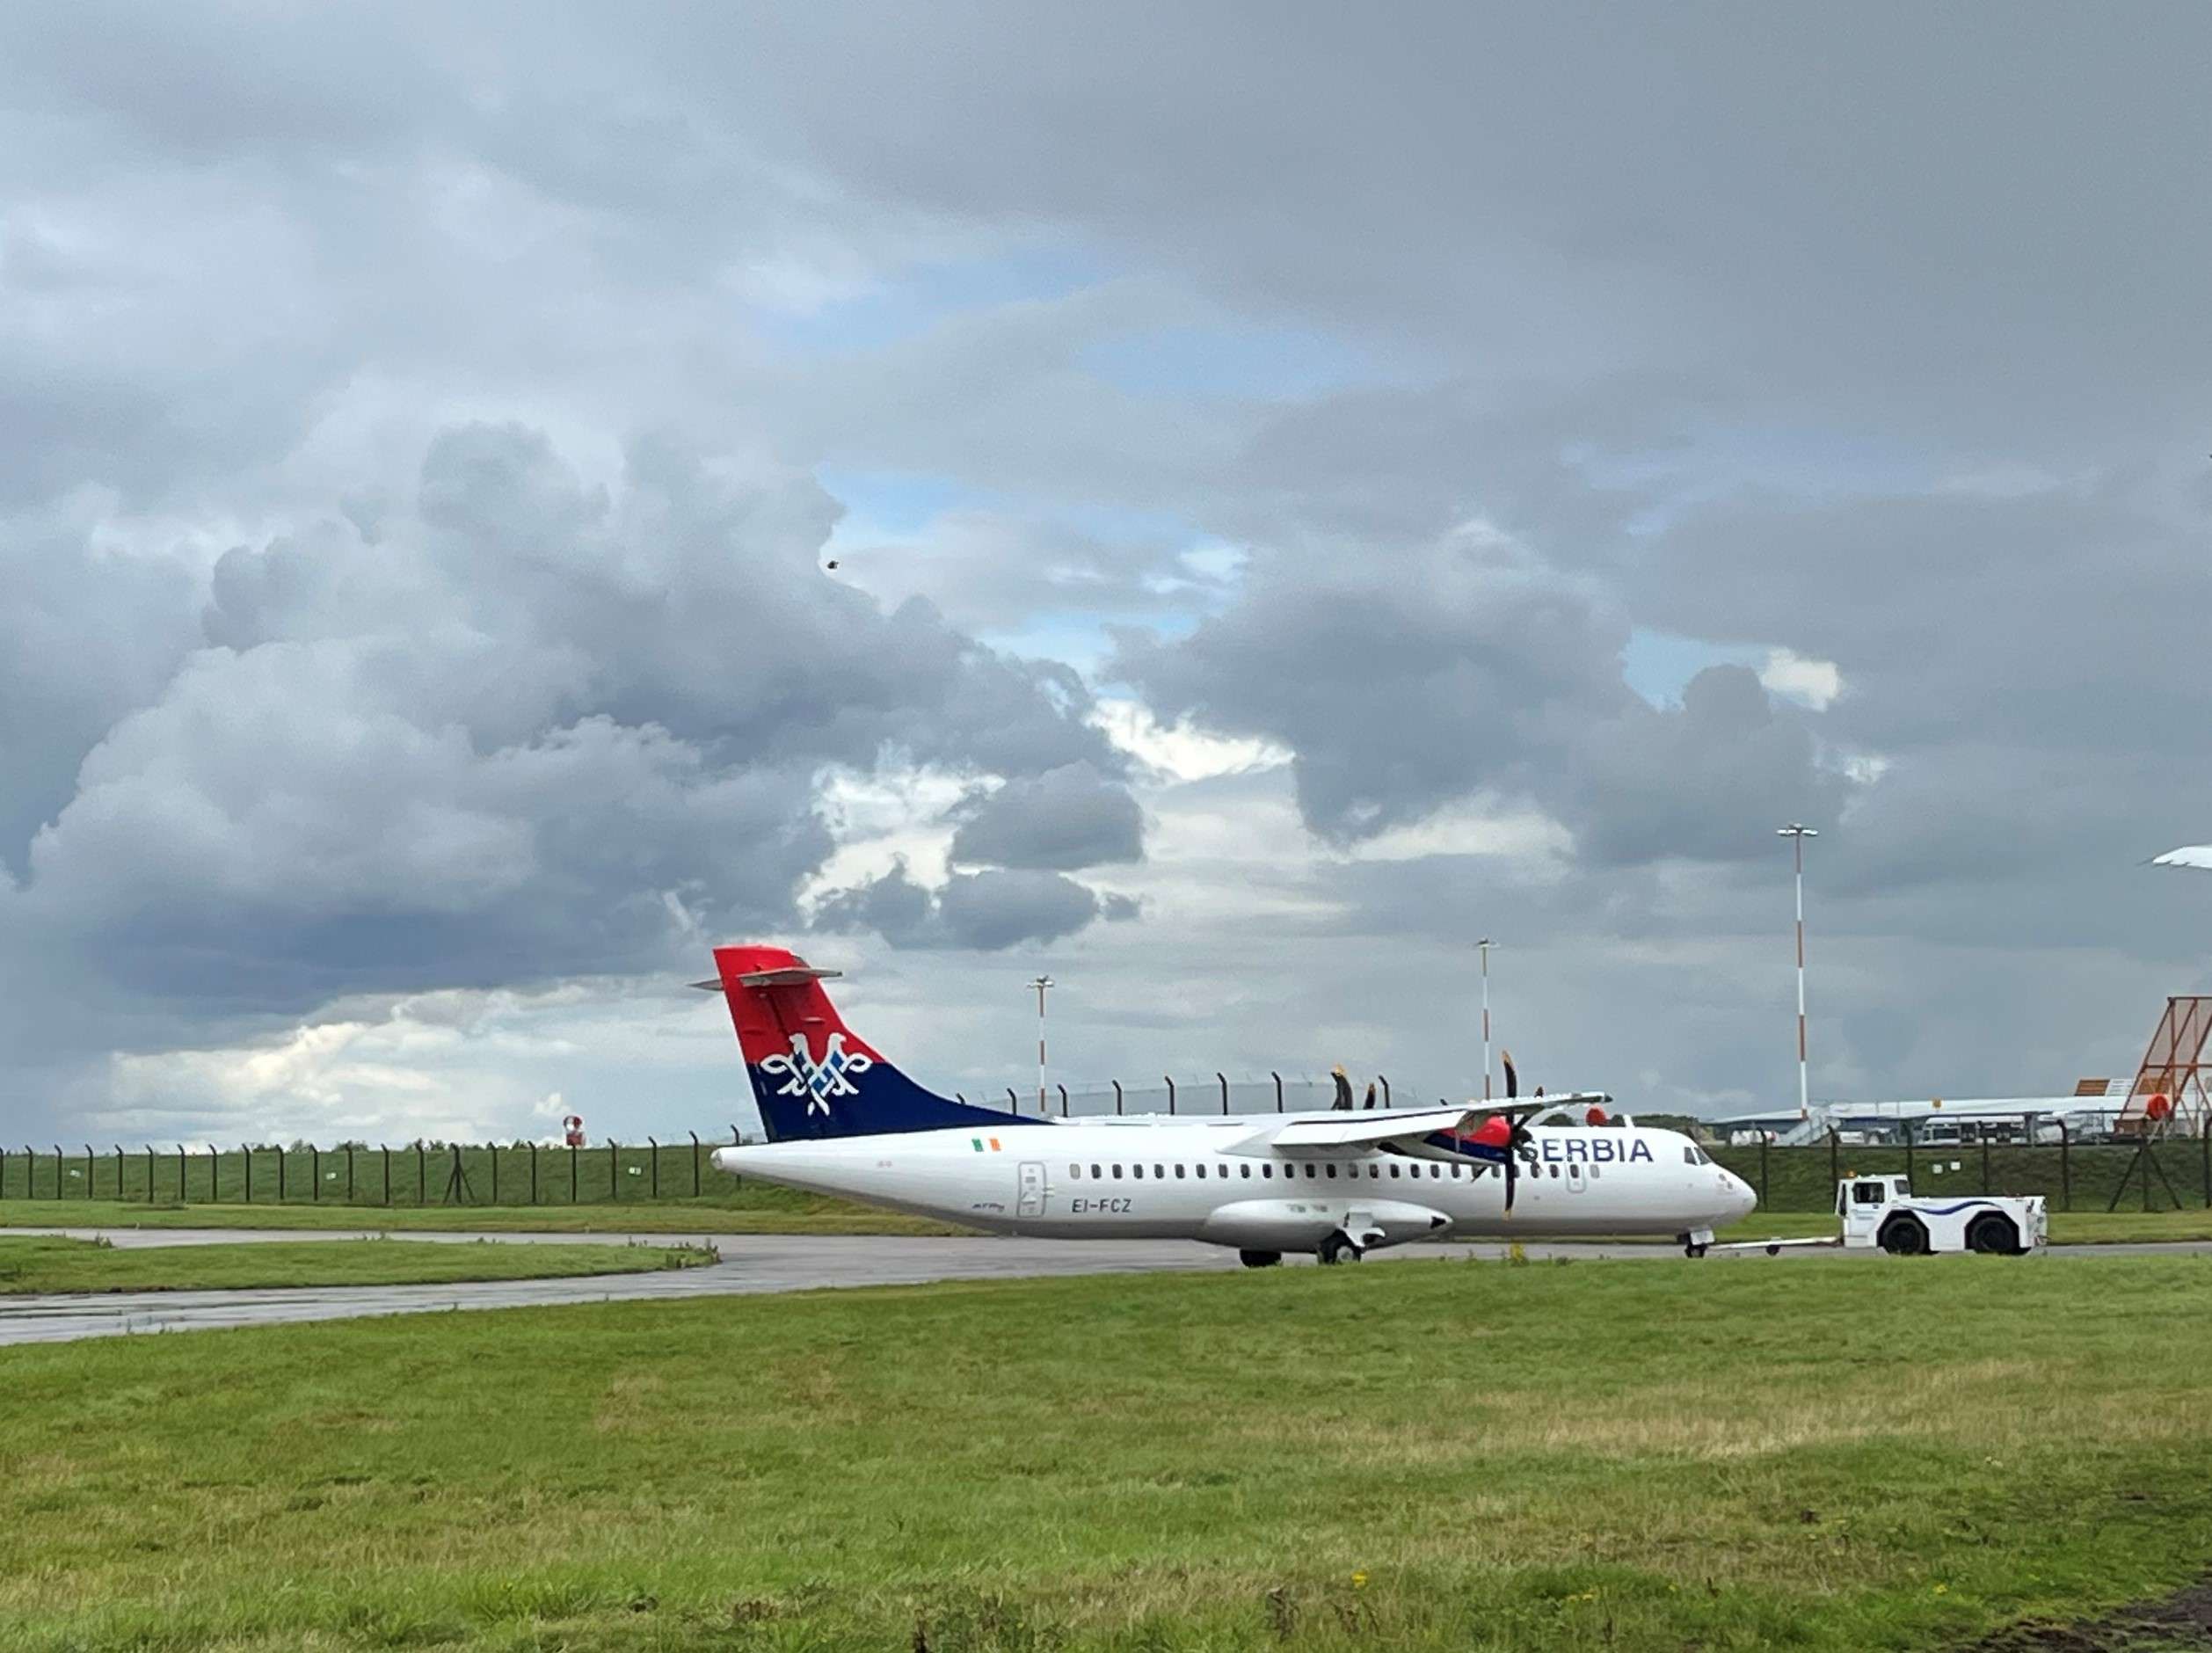 An Air Serbia ATR 72 aircraft parked on the tarmac.